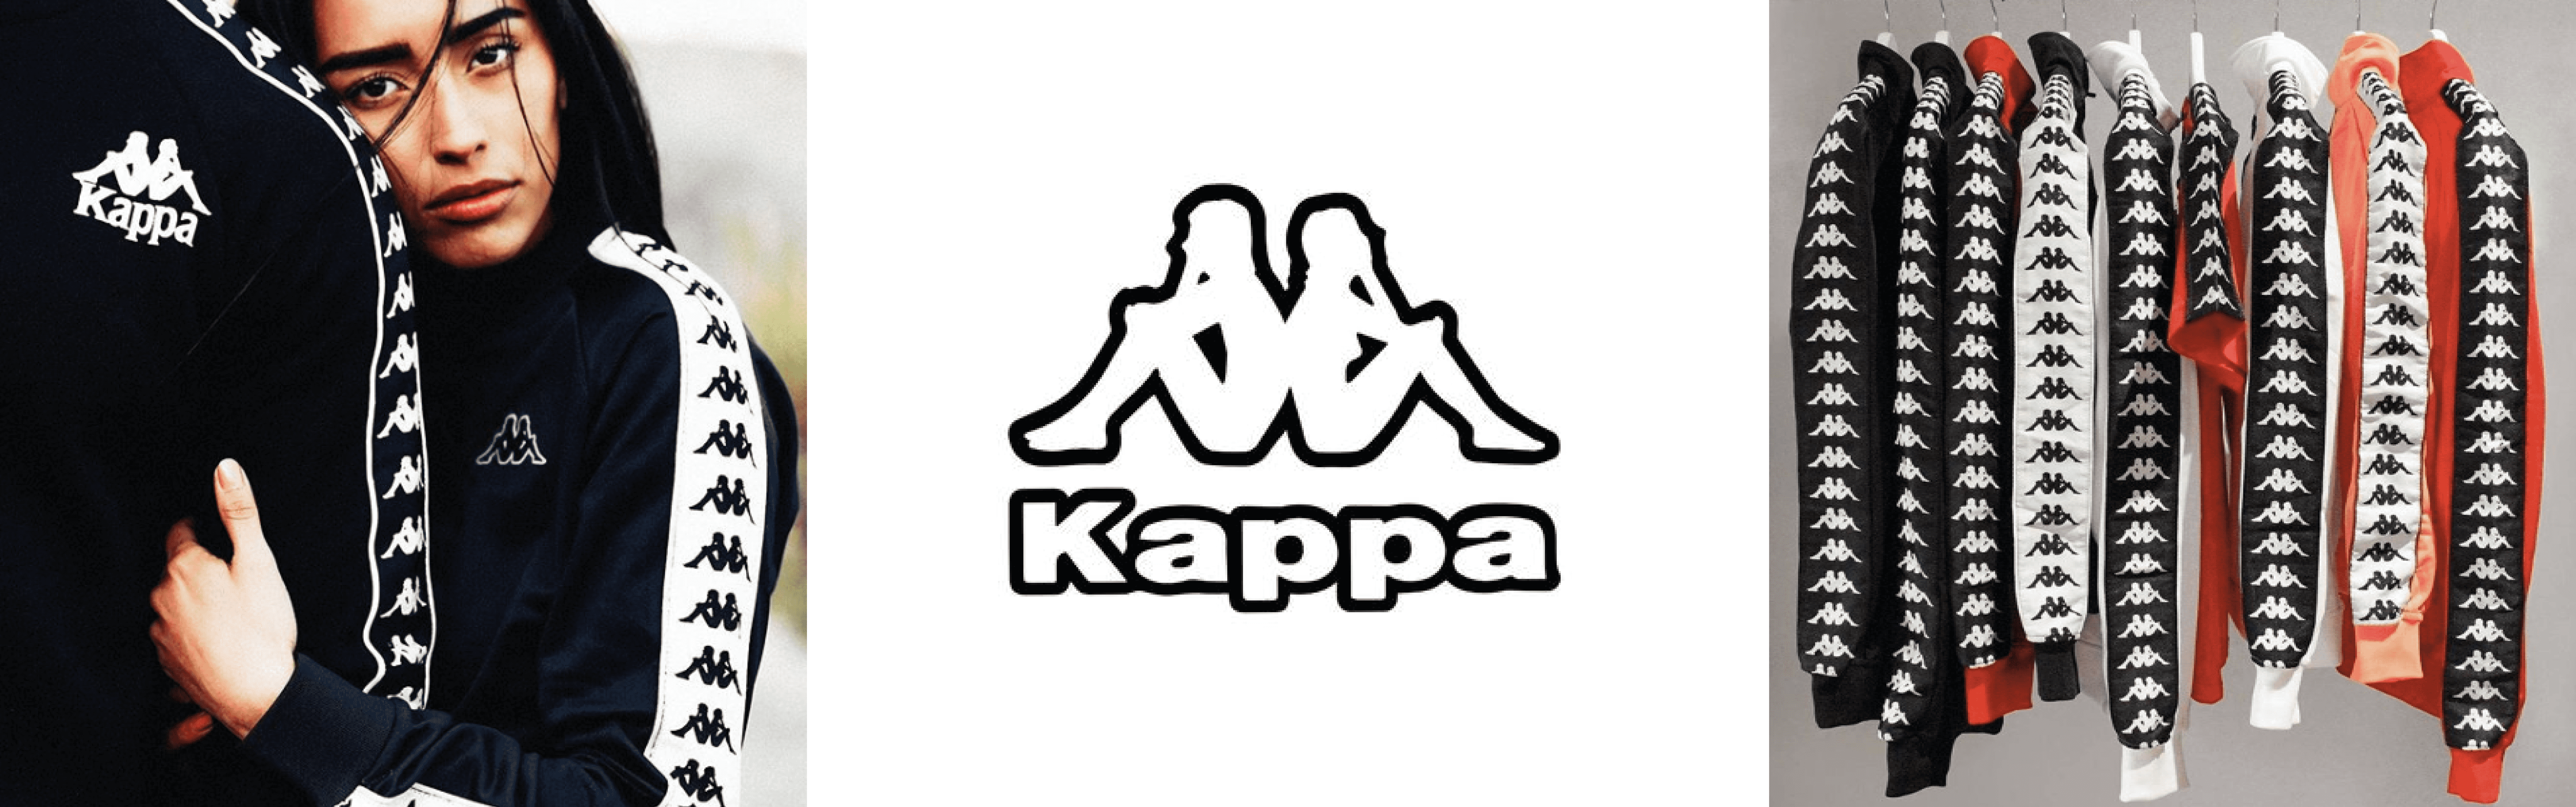 Kappa - Kappa t-shirts og hoodies på QNTS! – QNTS.dk